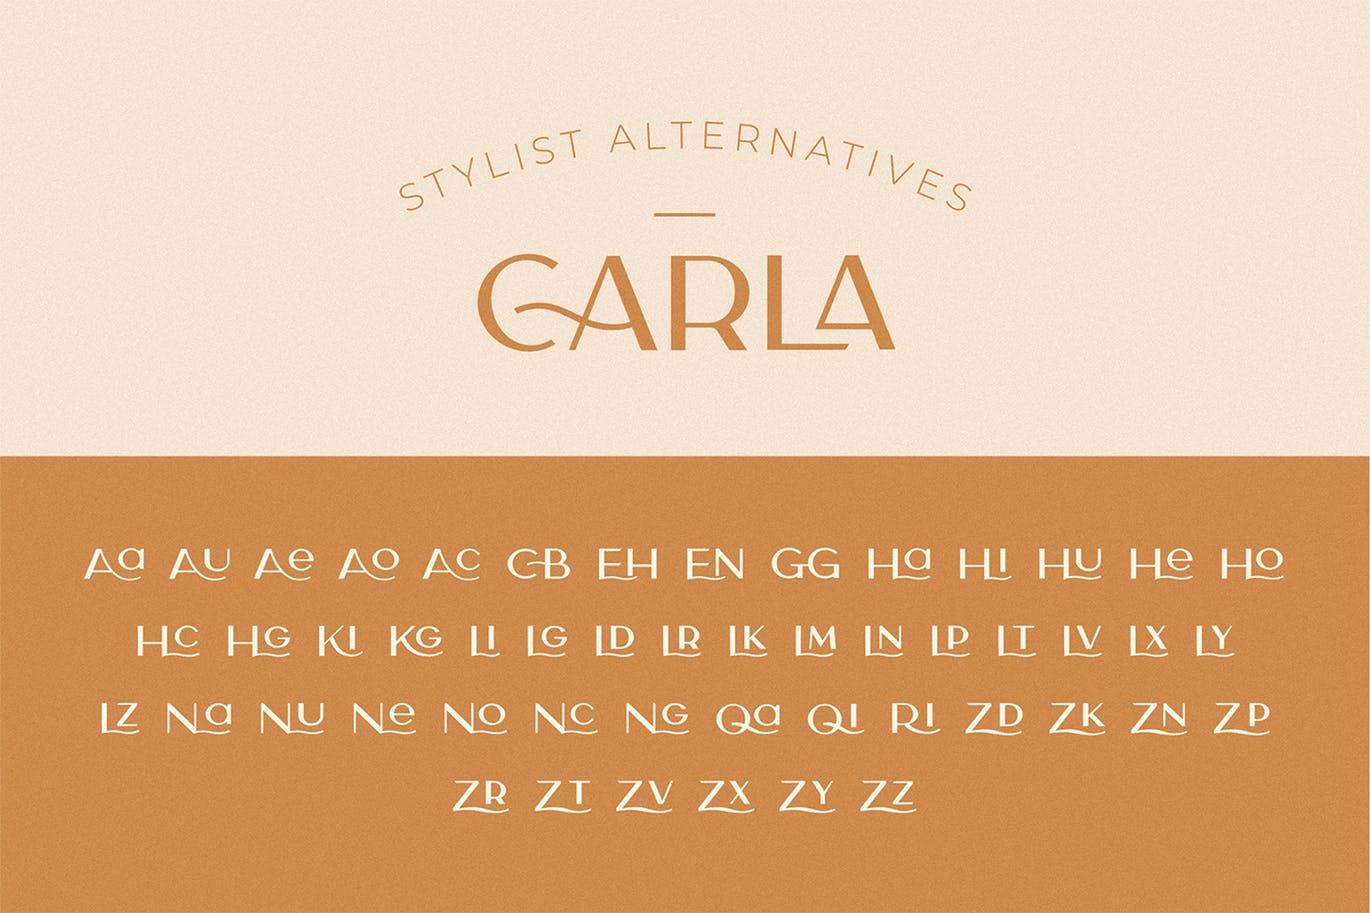 Carla Sans - Elegant Typeface